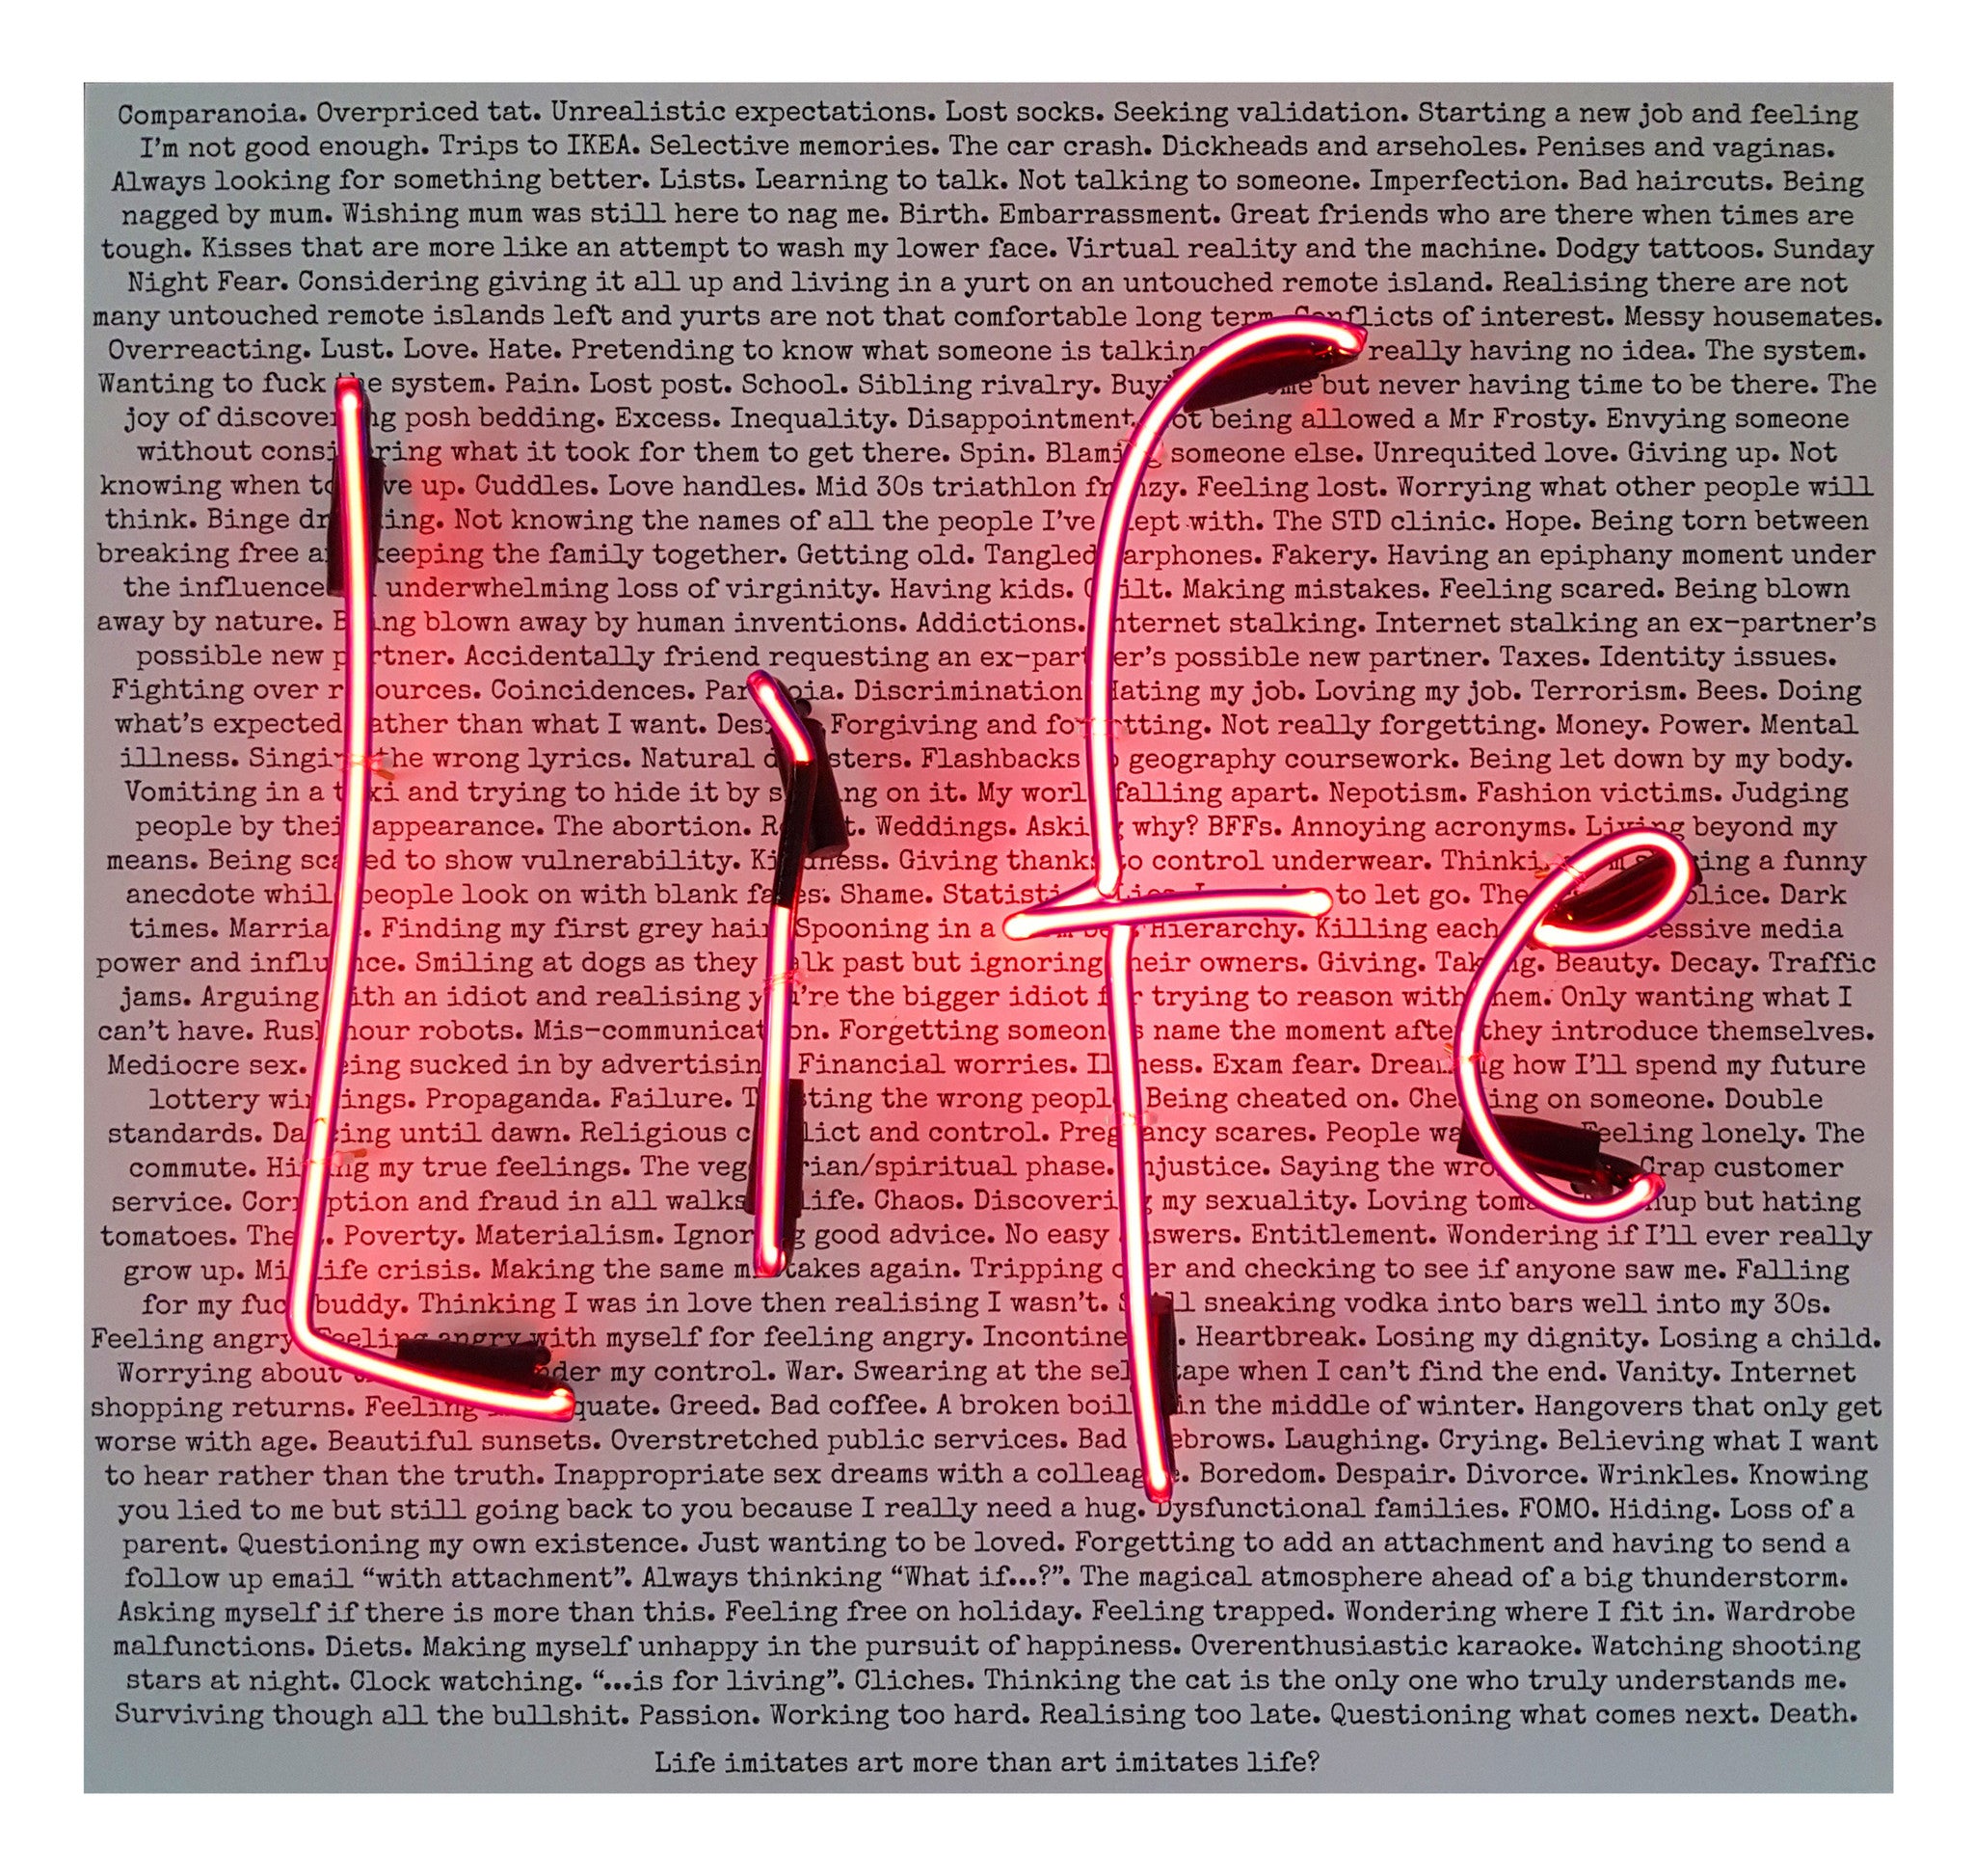 "Its Complicated" Rebecca Mason (Pink Life)